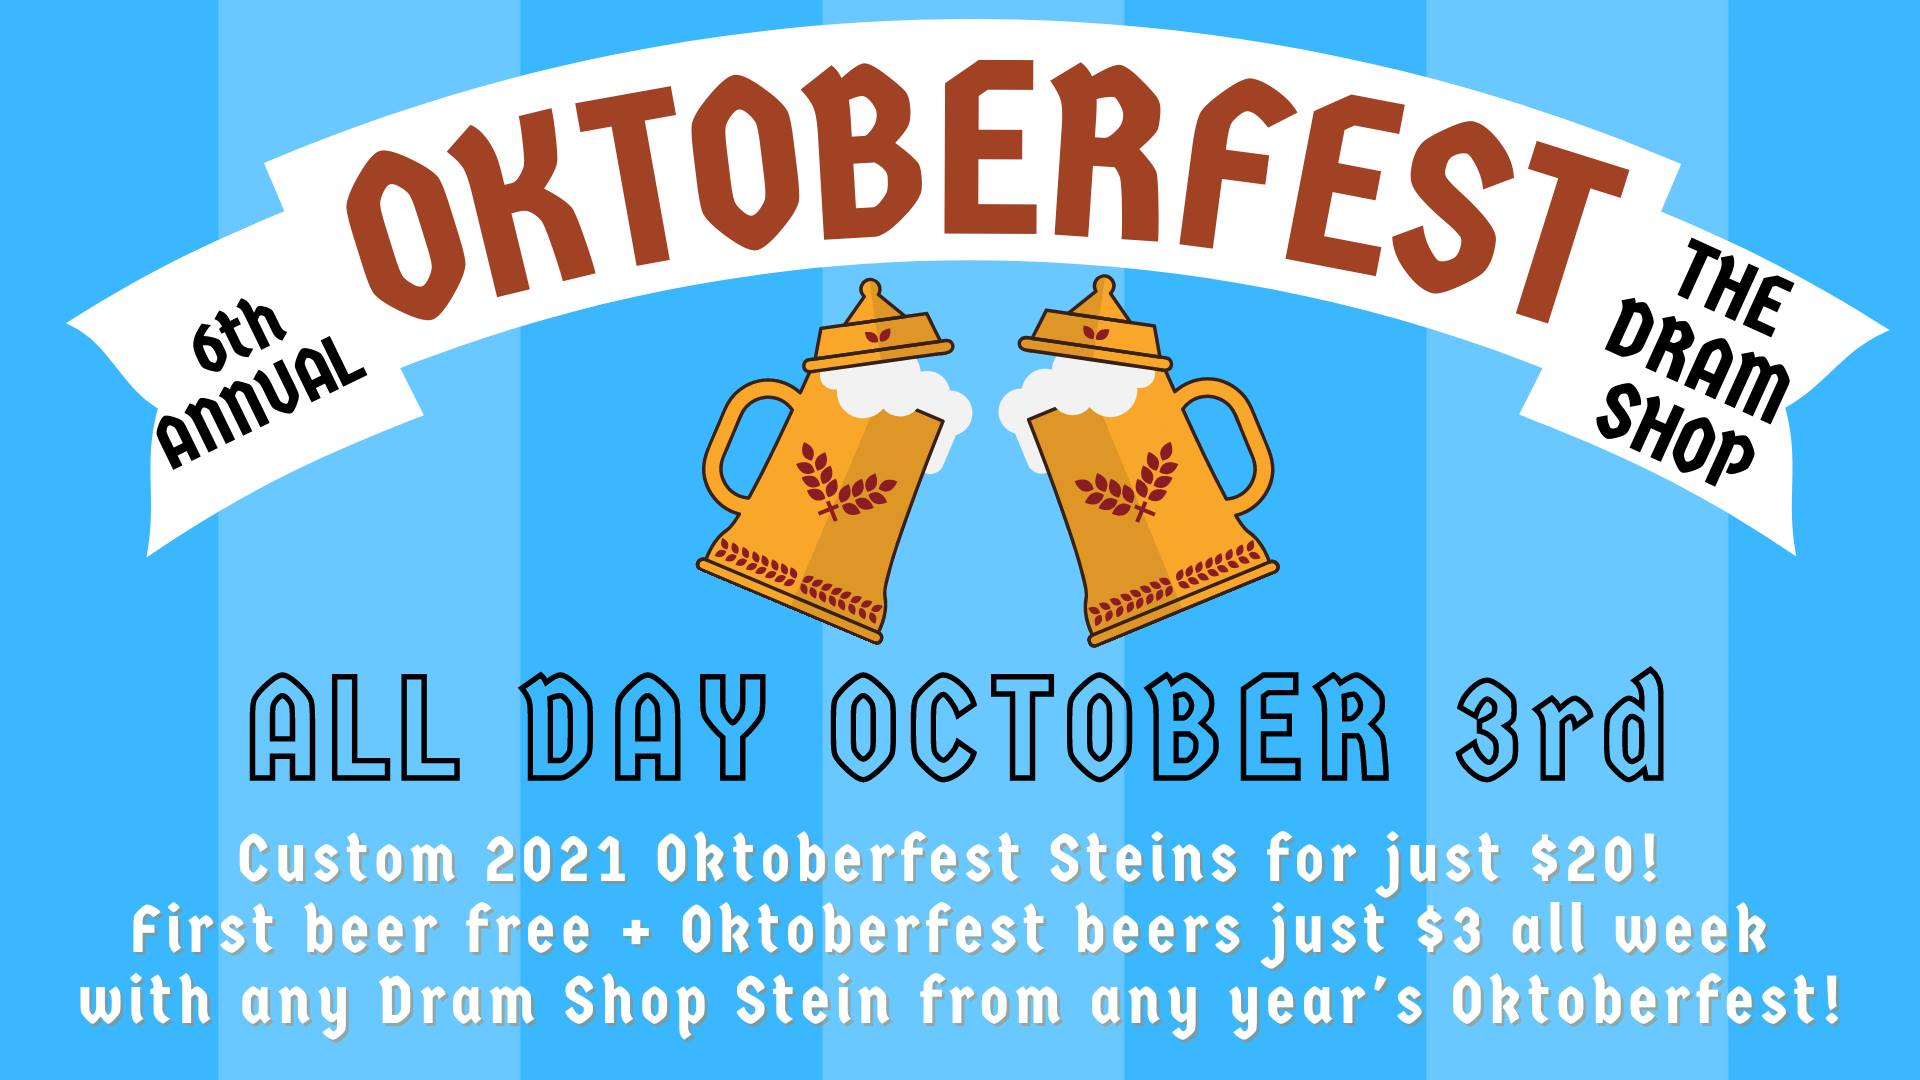 The Dram Shop's Sixth Annual Oktoberfest